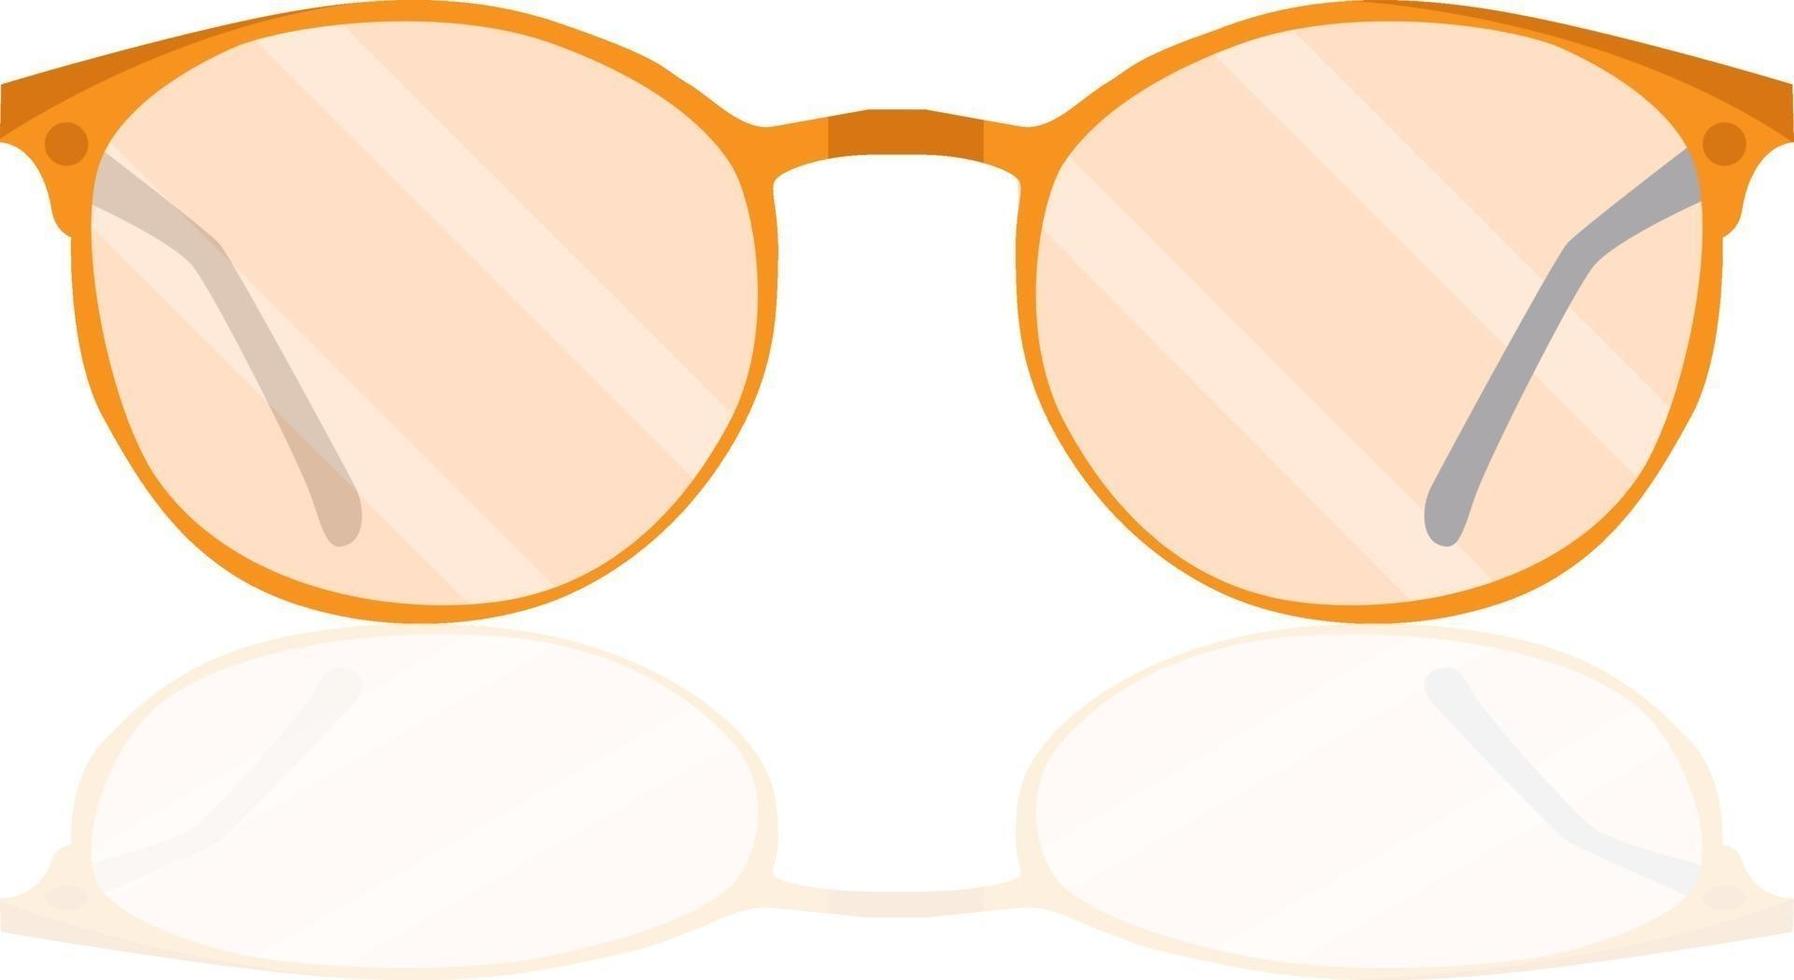 Sun glasses, illustration, vector on a white background.